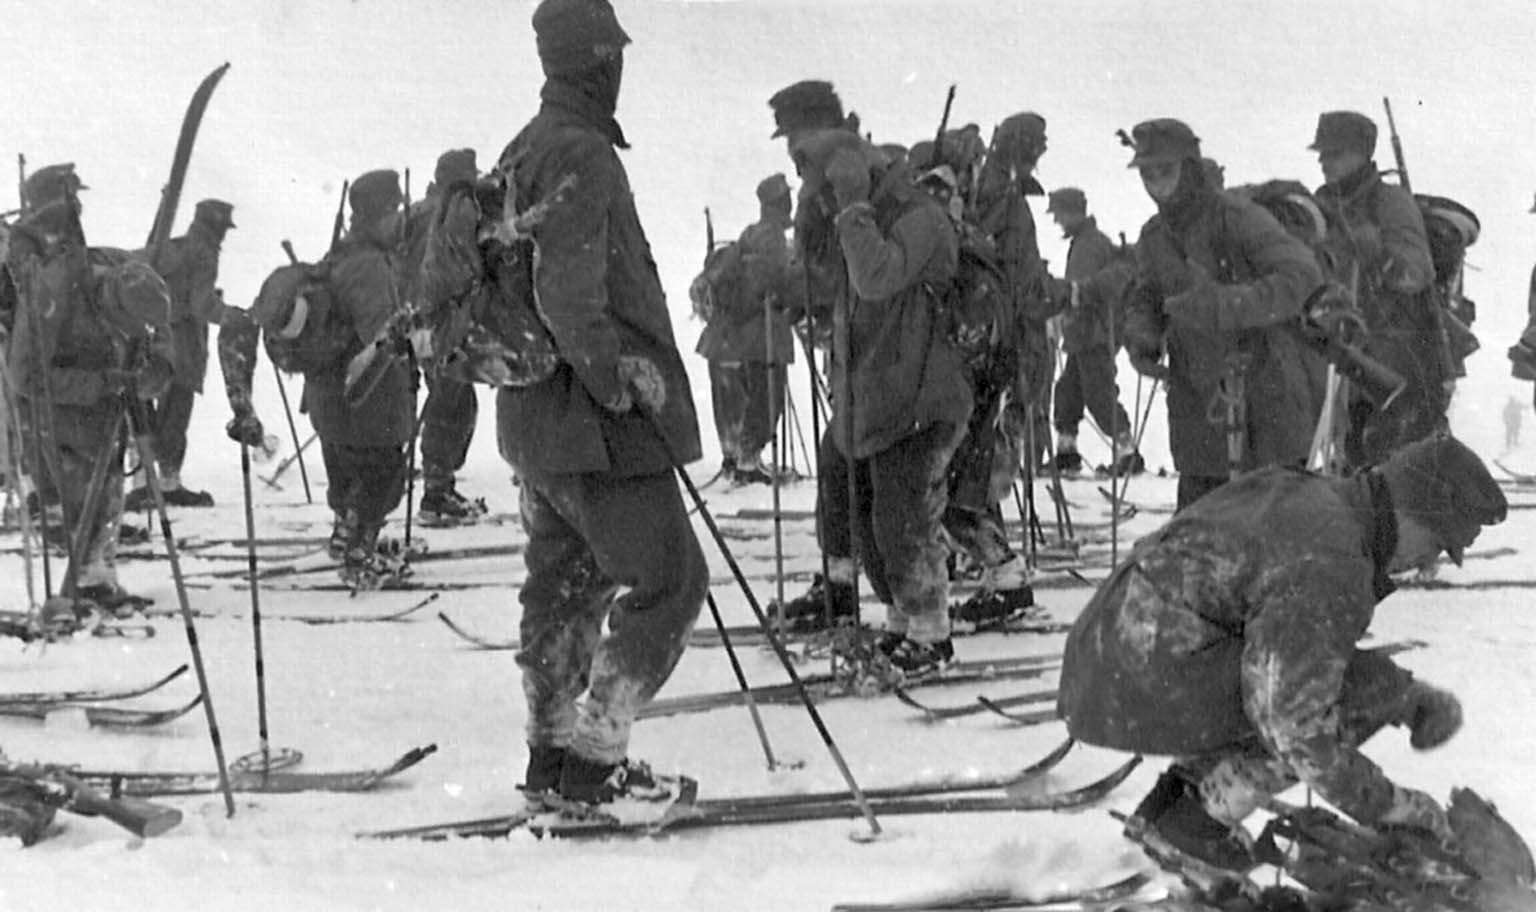 Kuvahaun tulos haulle danish troops ski ww2